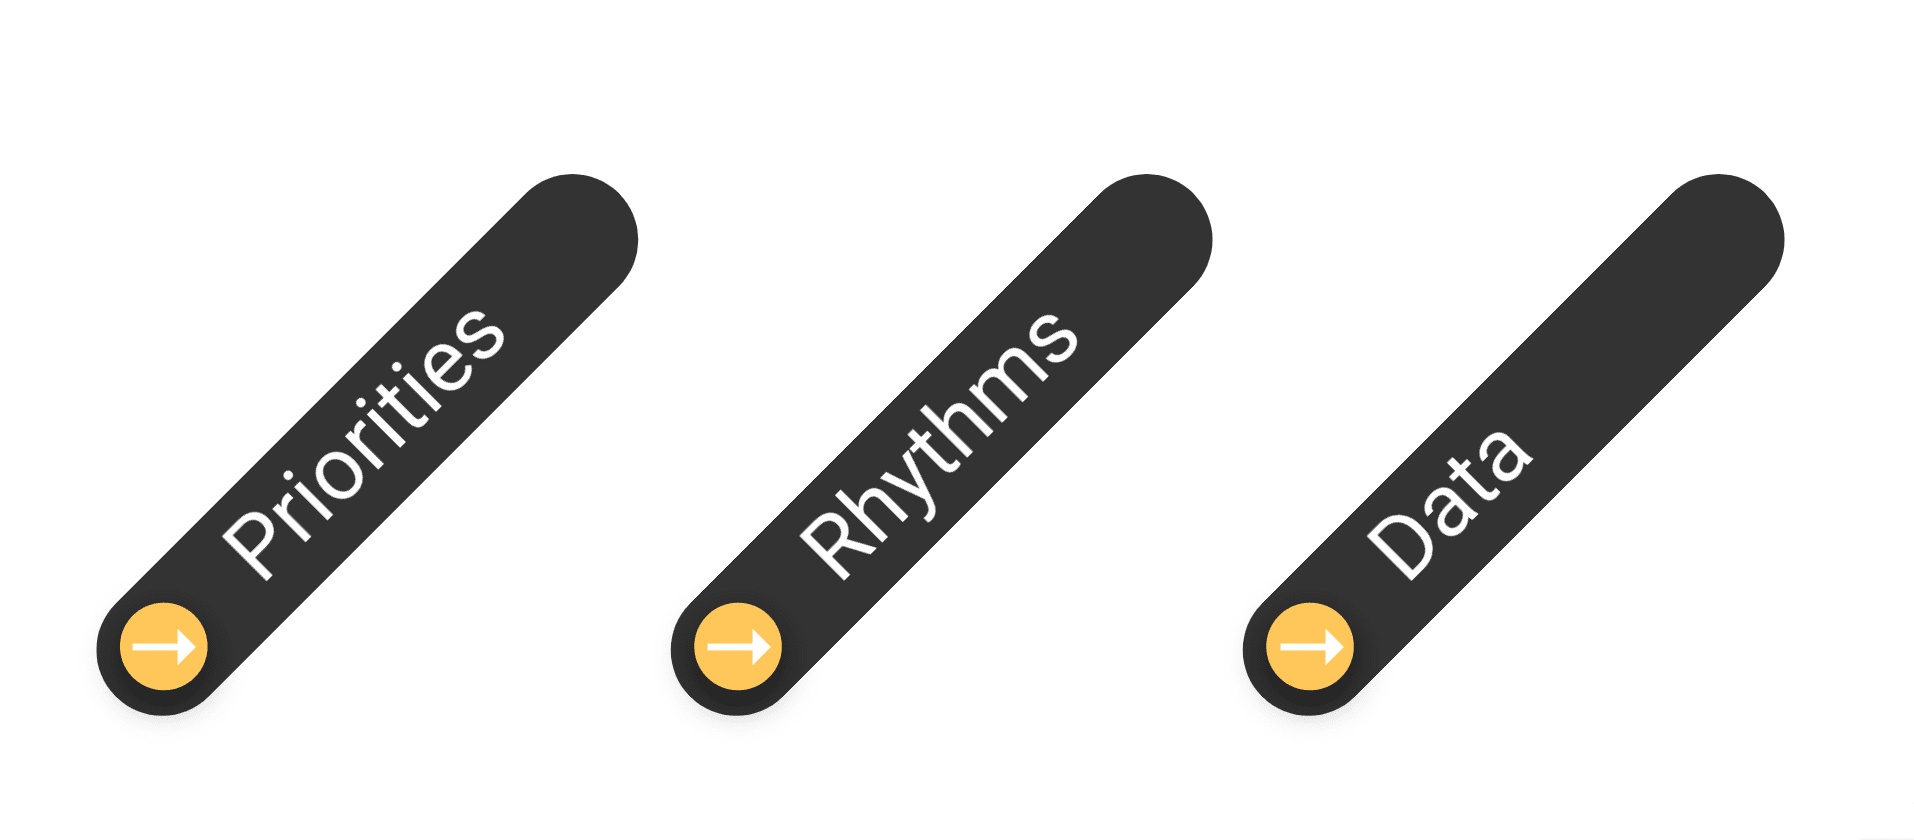 Priorities, rhythms, data graphic